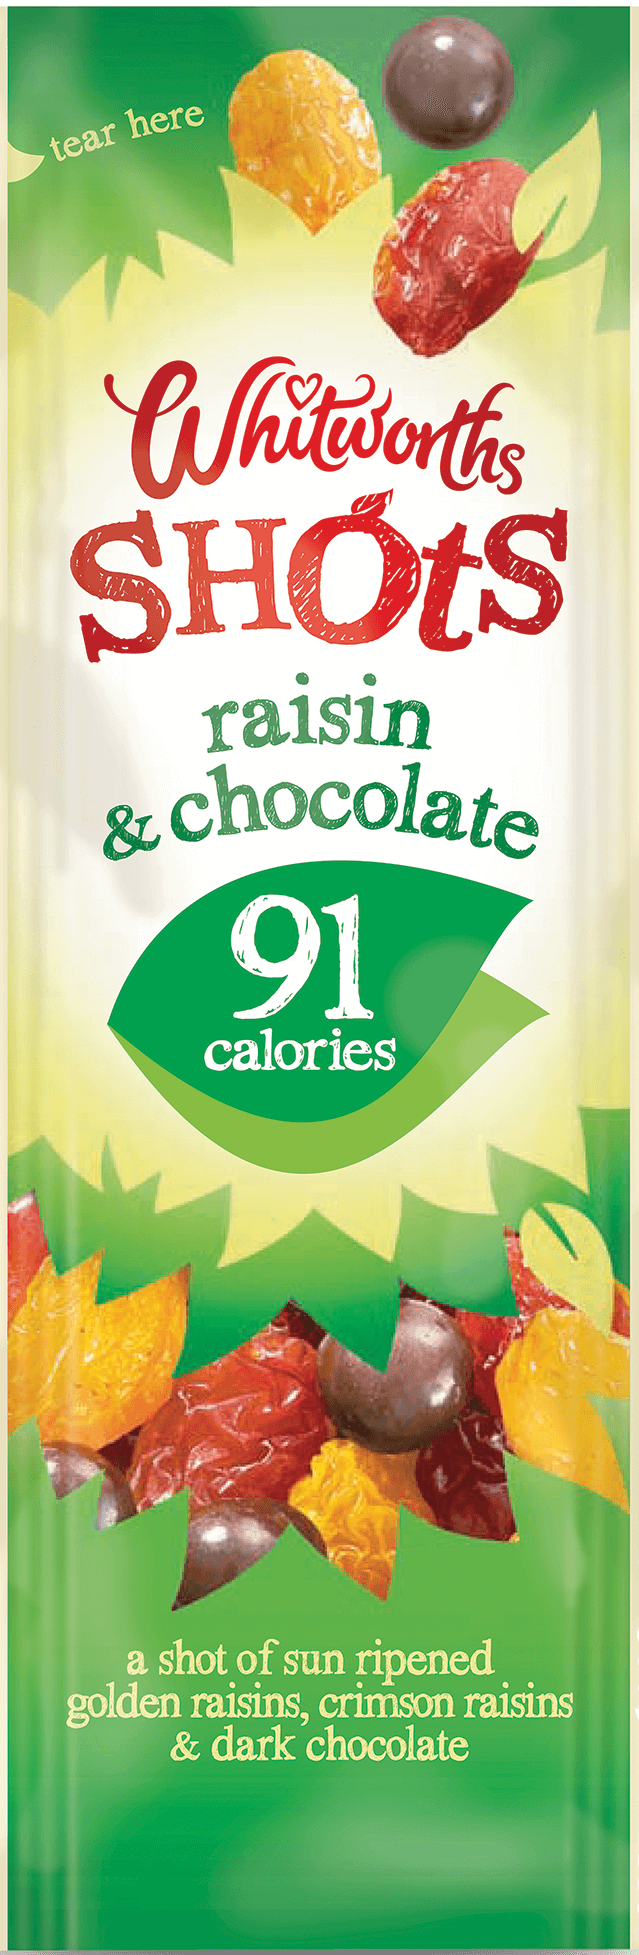 Whitworths Shots - Raisin & Chocolate (91 calories)